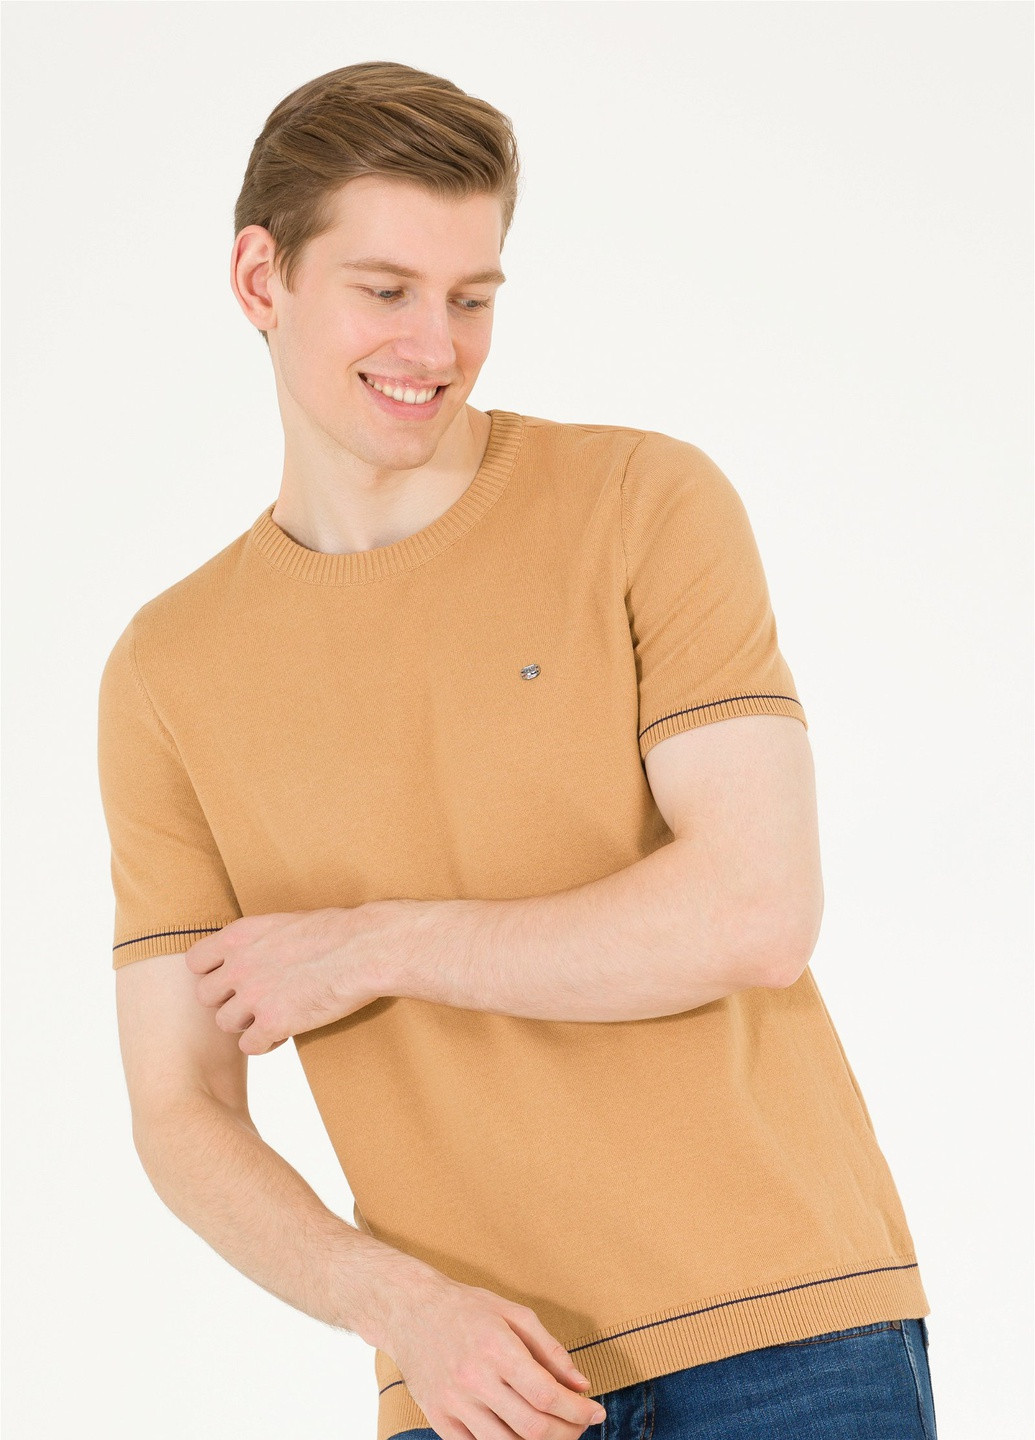 Светло-коричневая футболка-футболка u.s.polo assn мужская для мужчин U.S. Polo Assn.